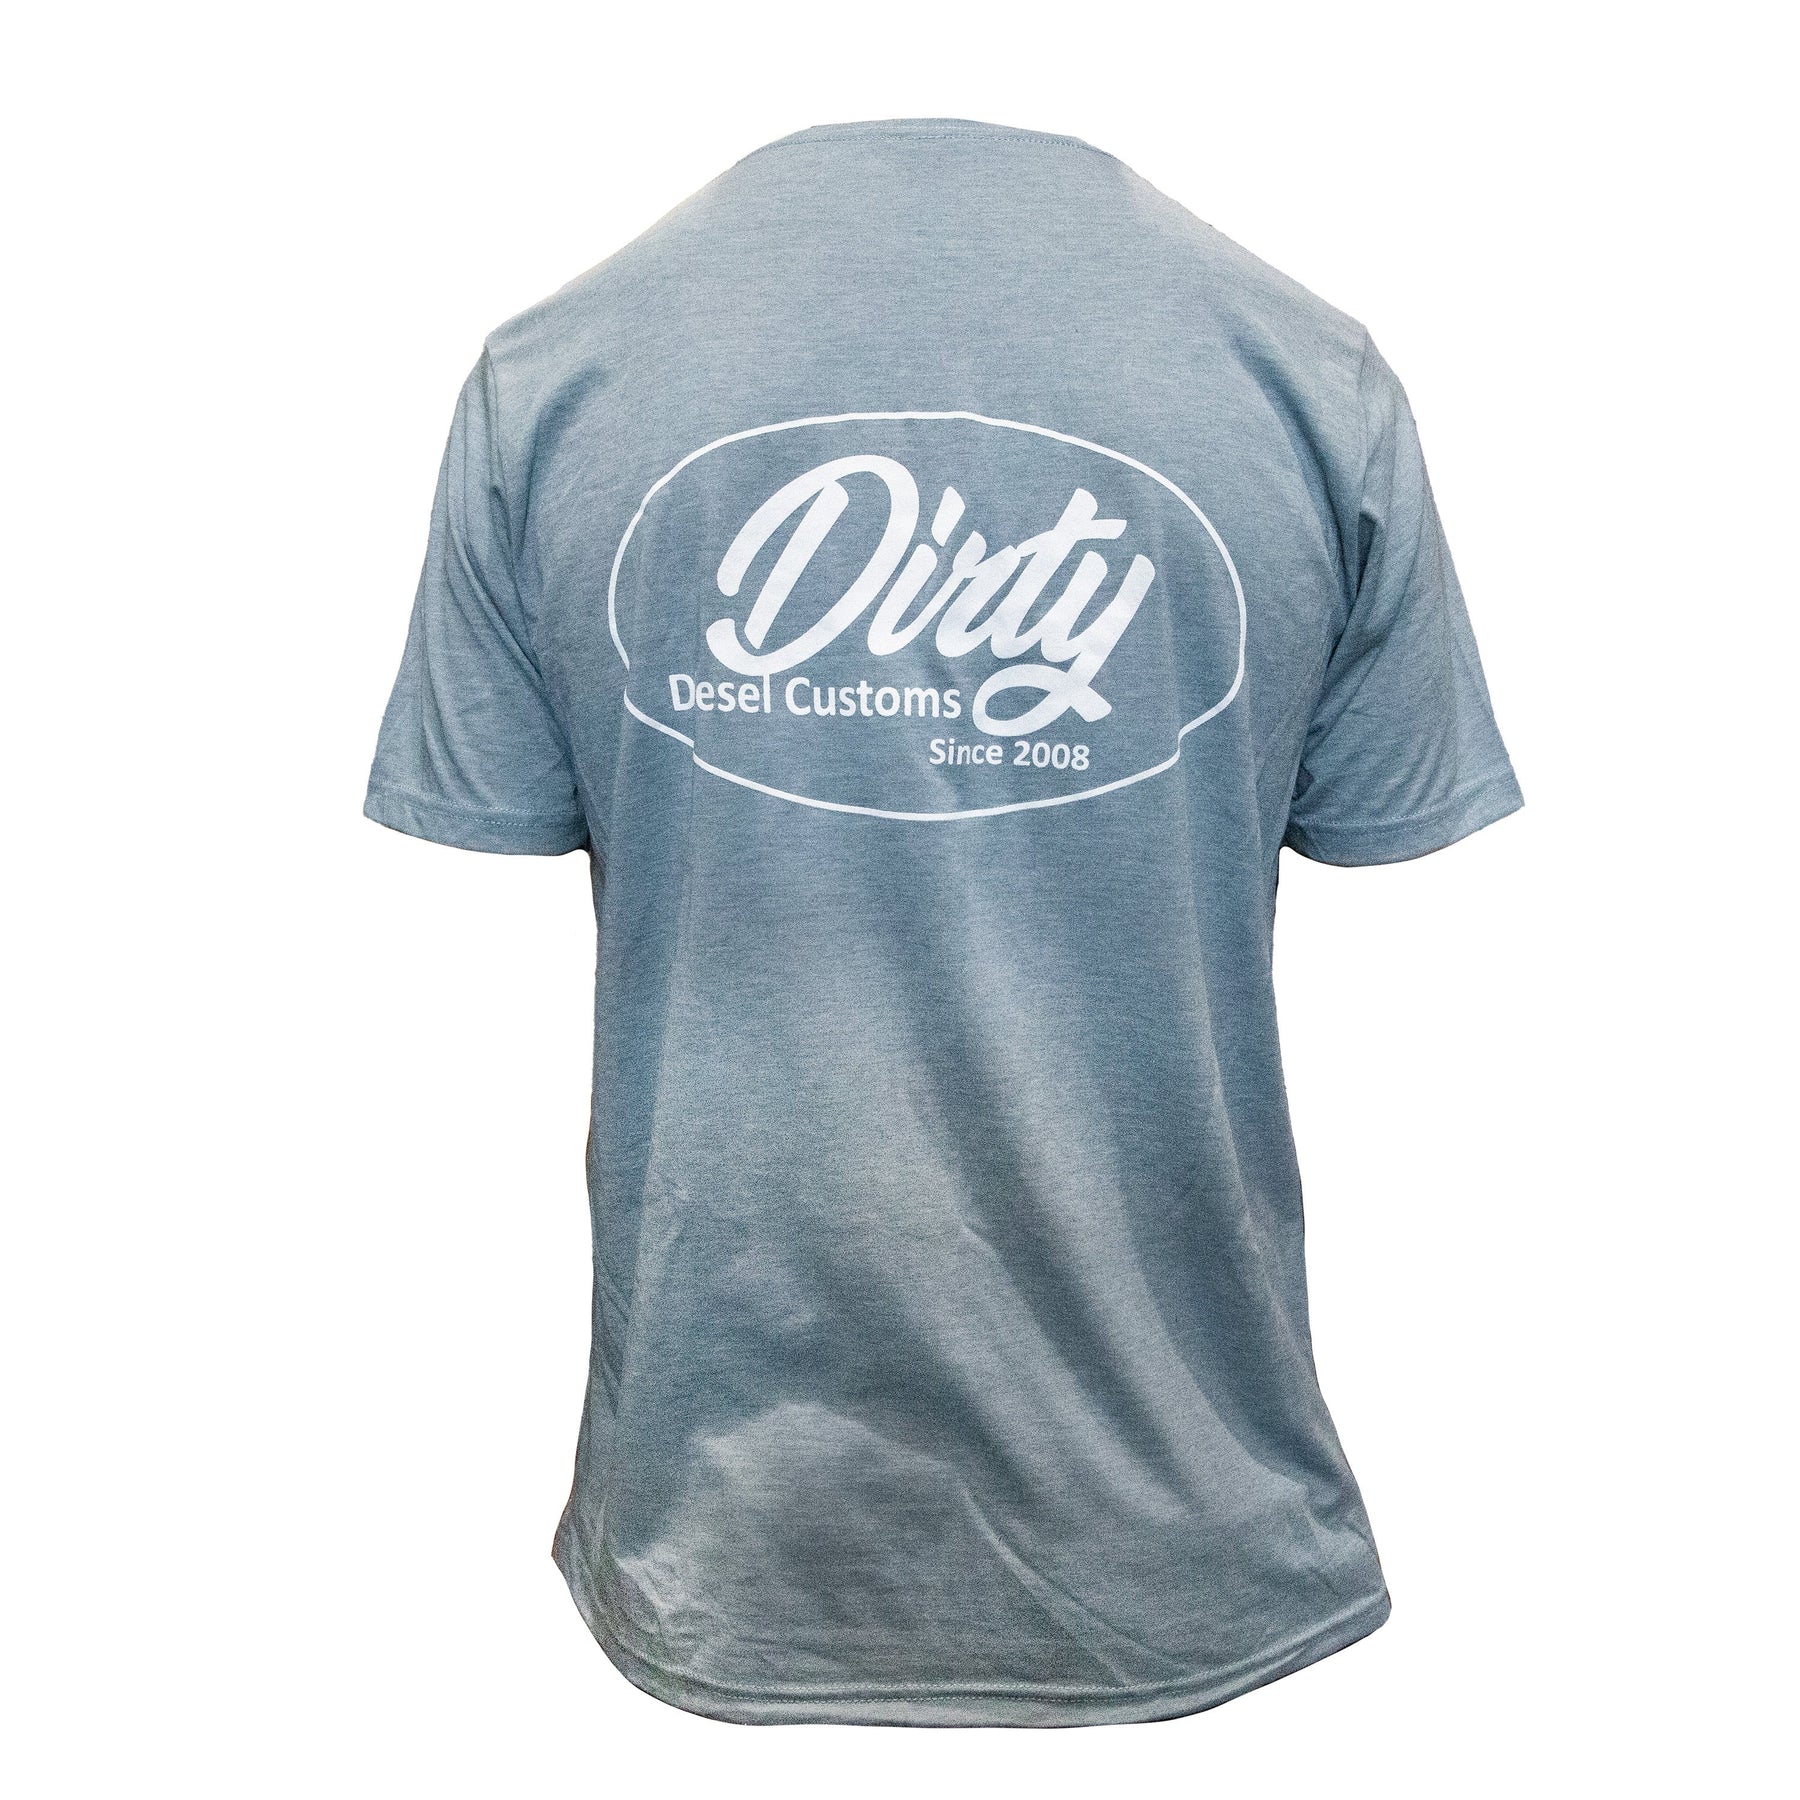 Classic Dirty Diesel T-Shirt